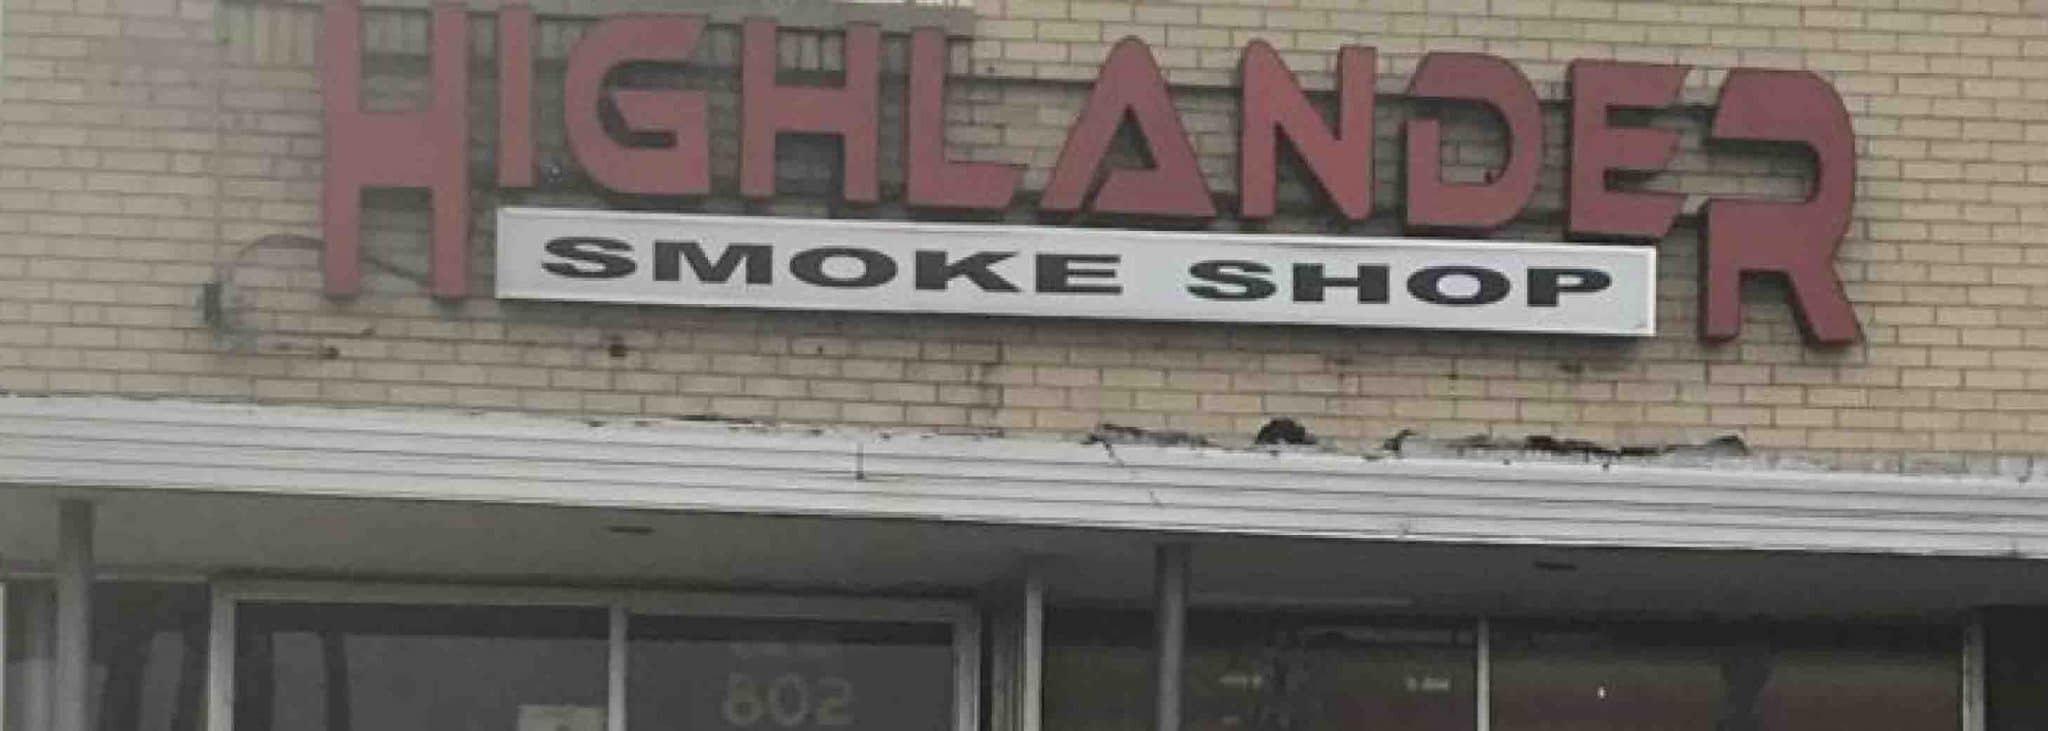 highlander-smoke-shop